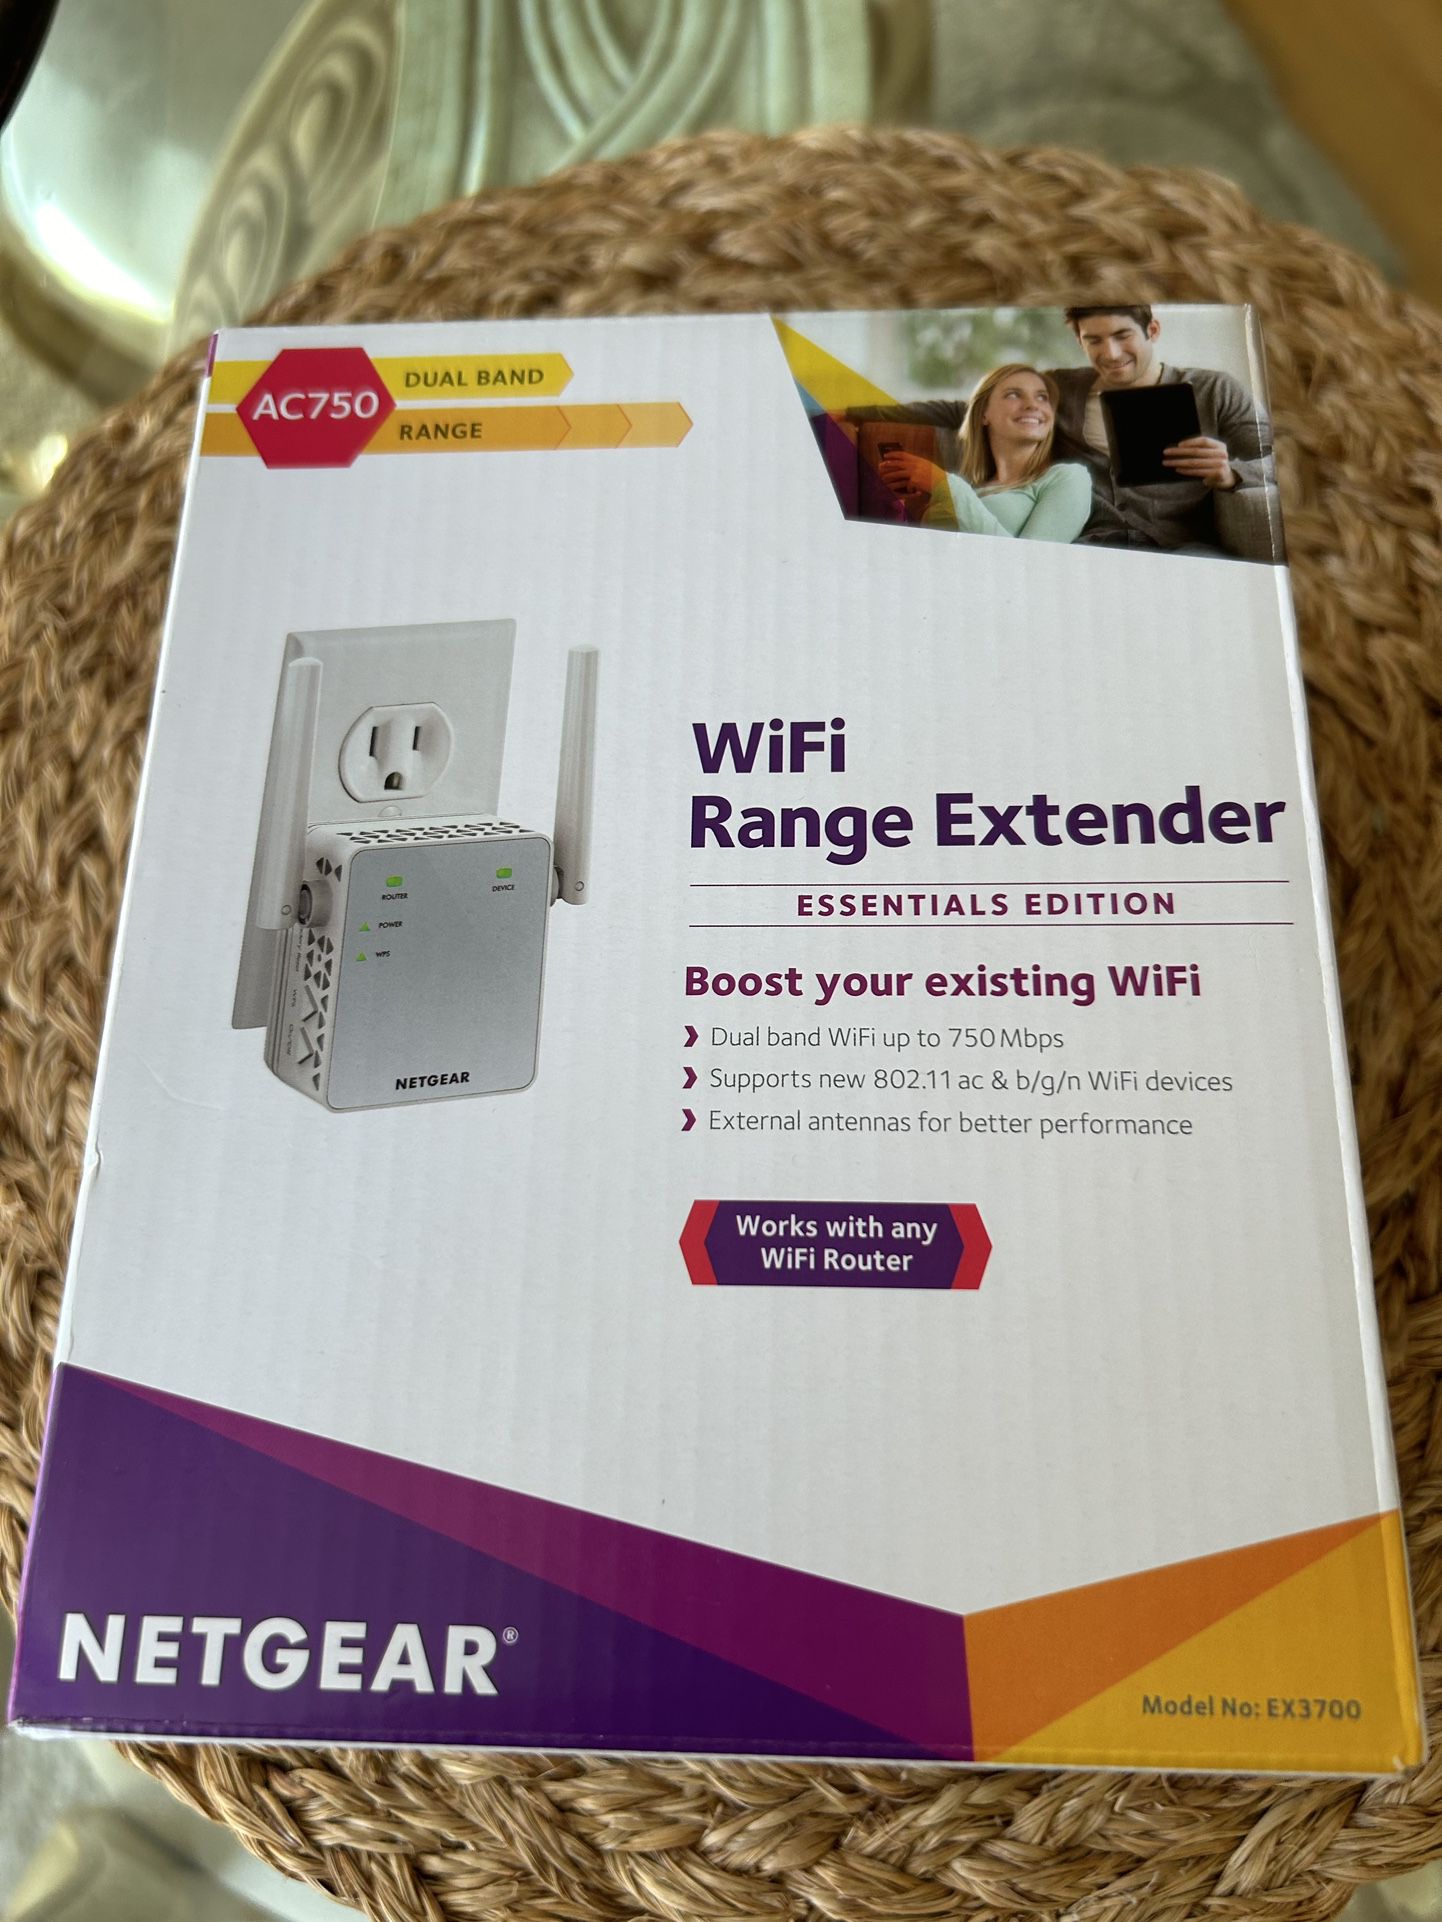 Netgear AC750 Dual Band Range WiFi Range Extender